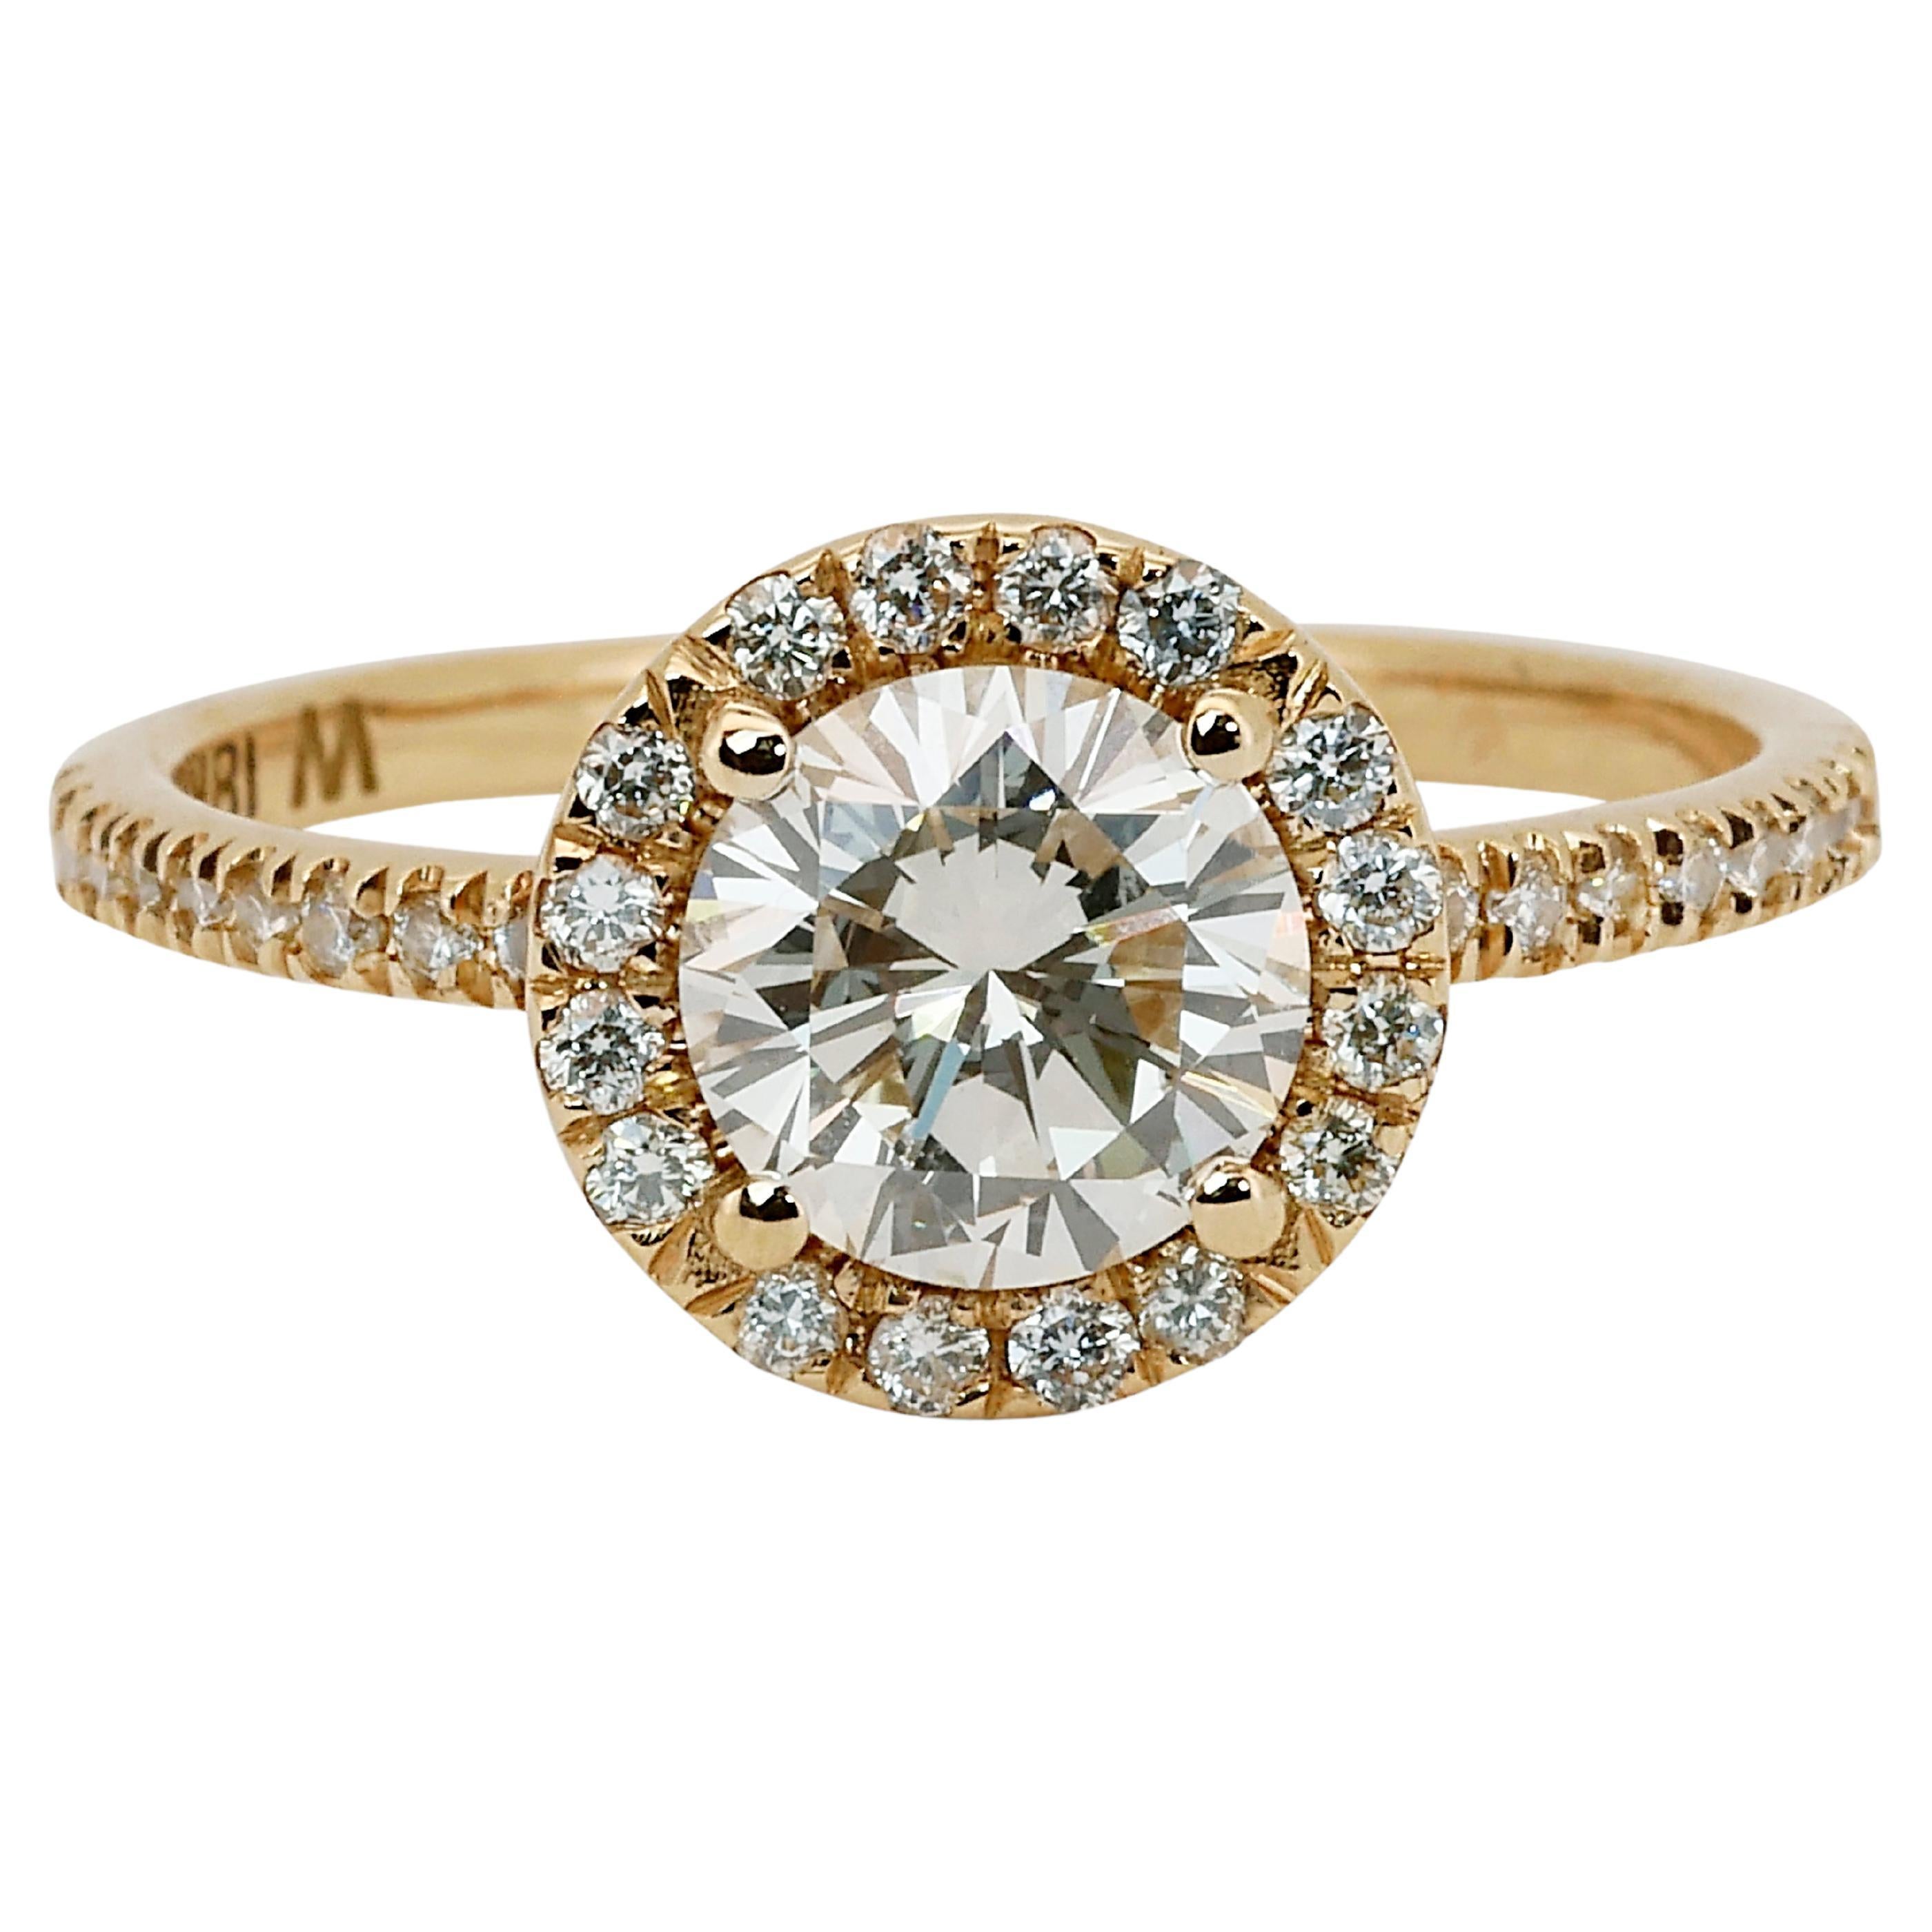 Stunning 18k Yellow Gold Halo Ring with 1.35 Natural Diamonds IGI Certificate